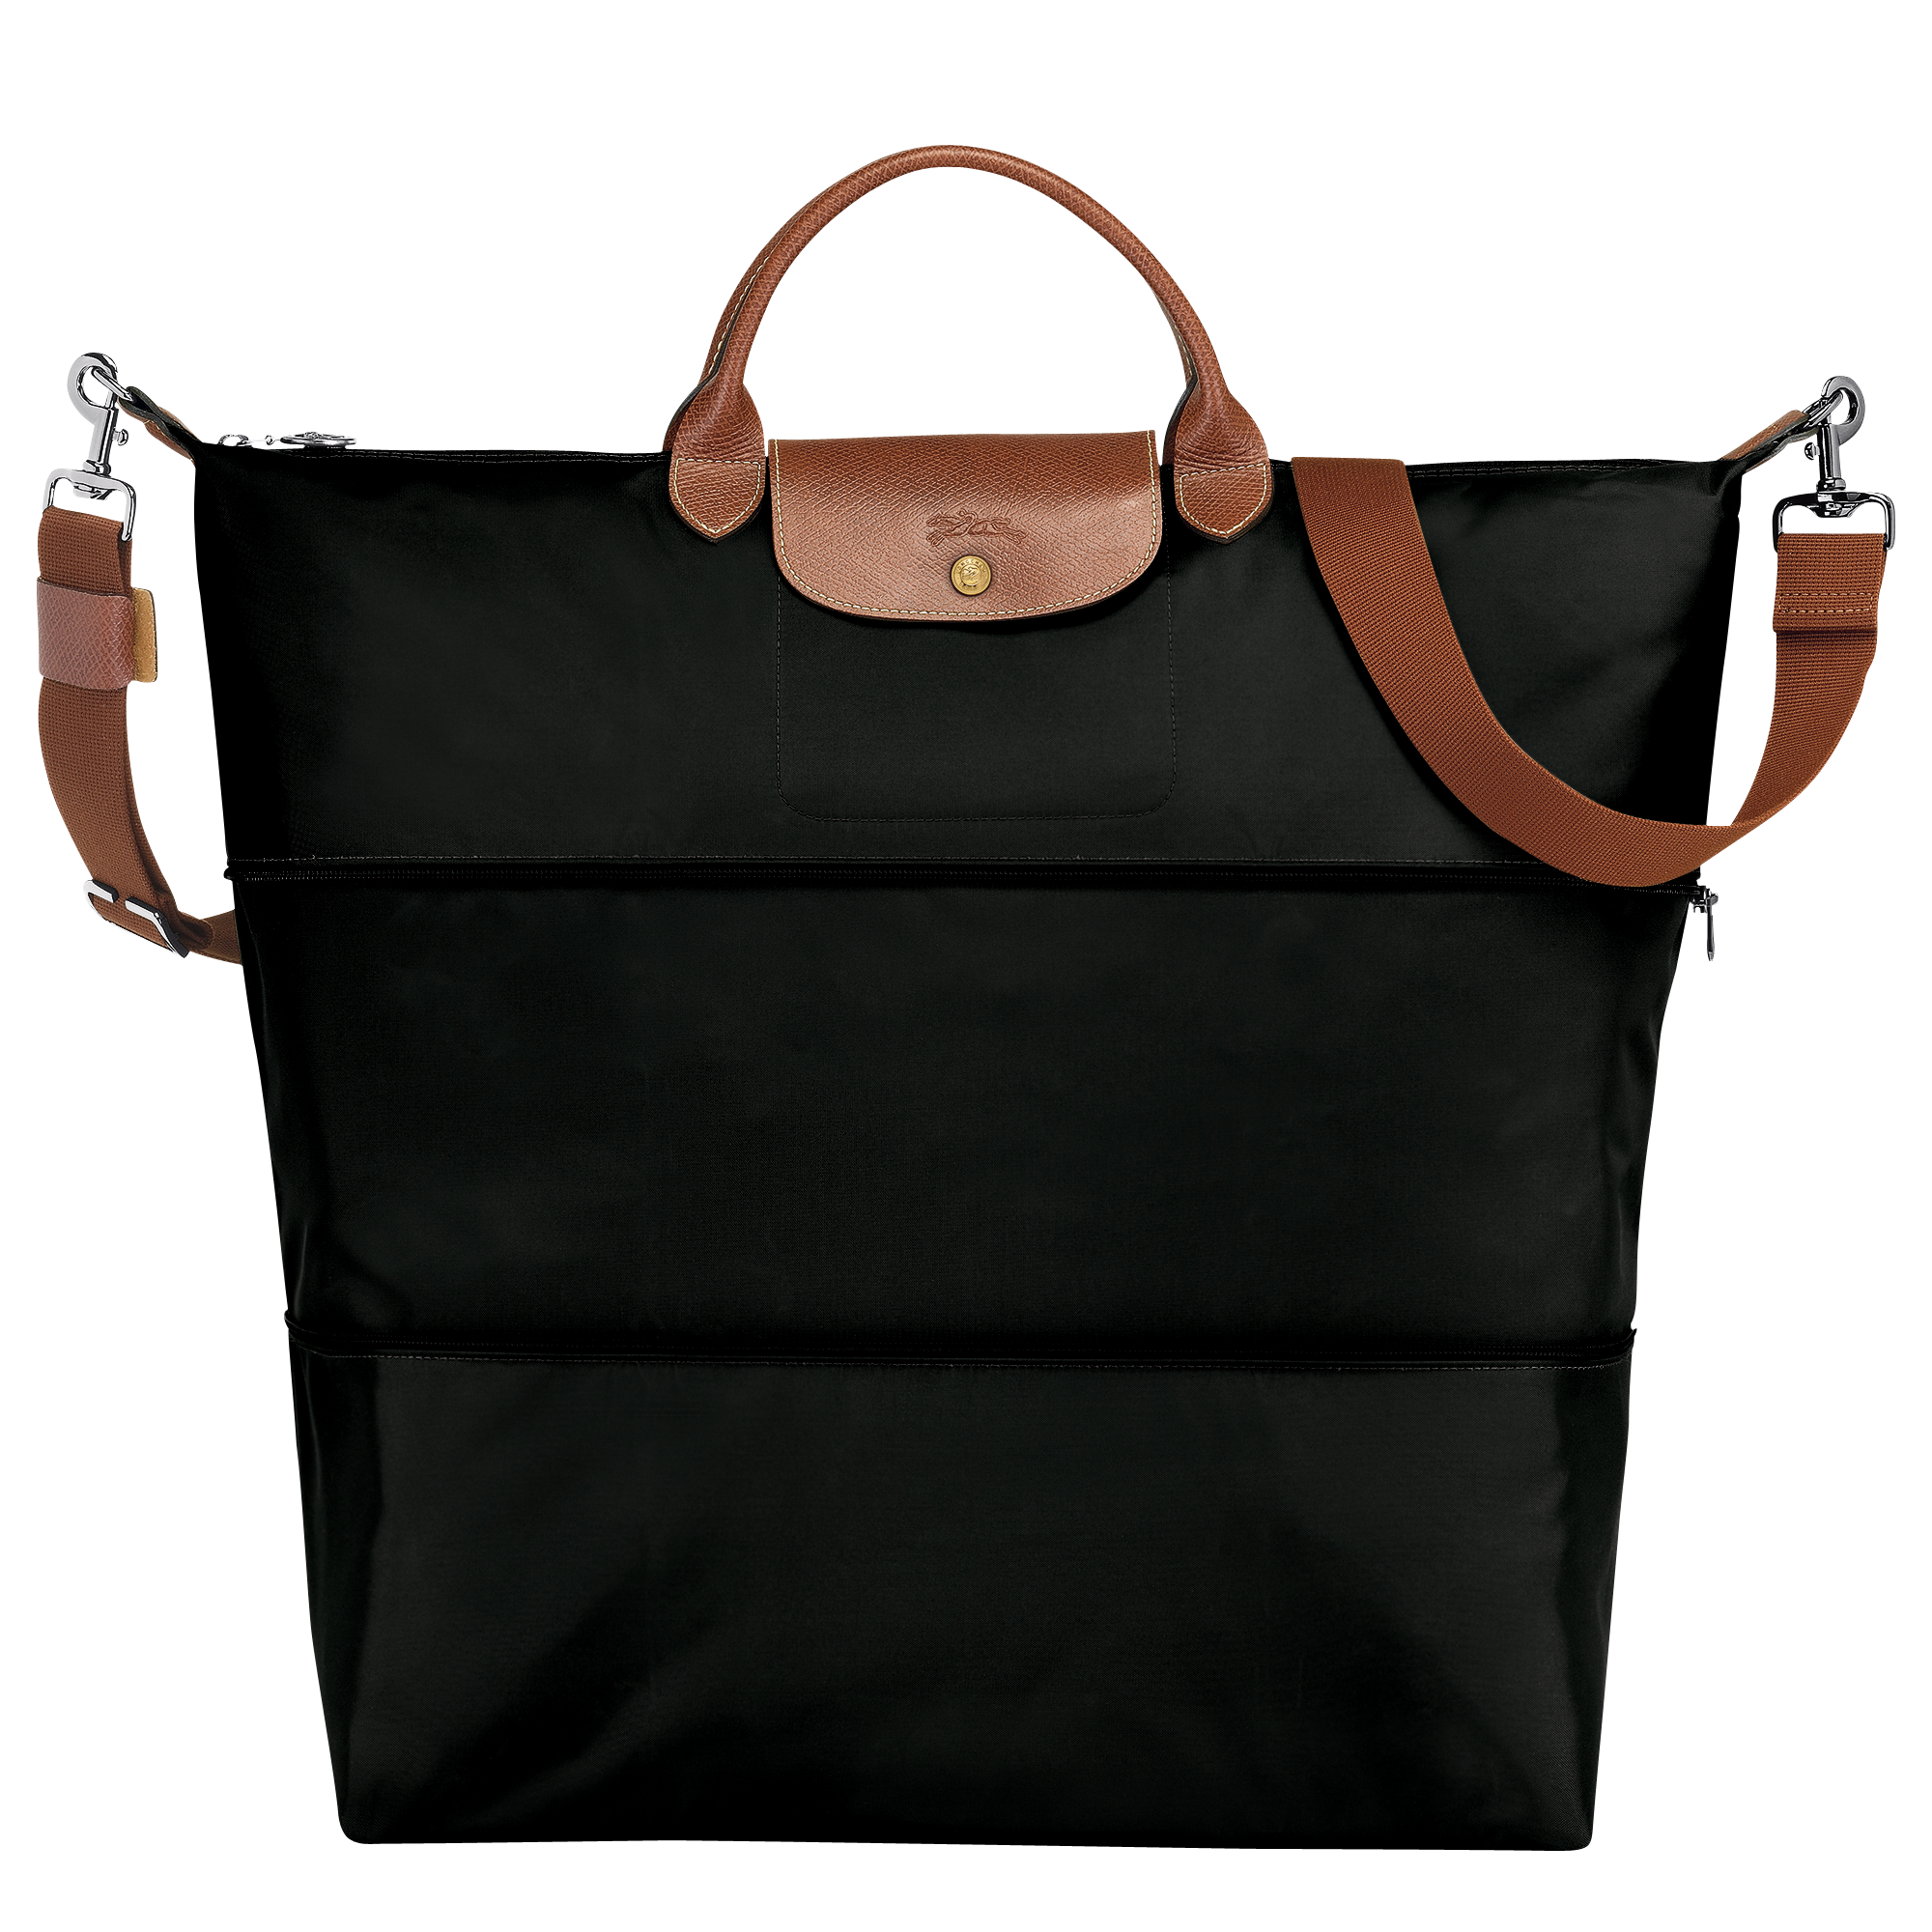 WILDHORN Leather Laptop Bag for Men I Office bags I Travel Bags I Casu